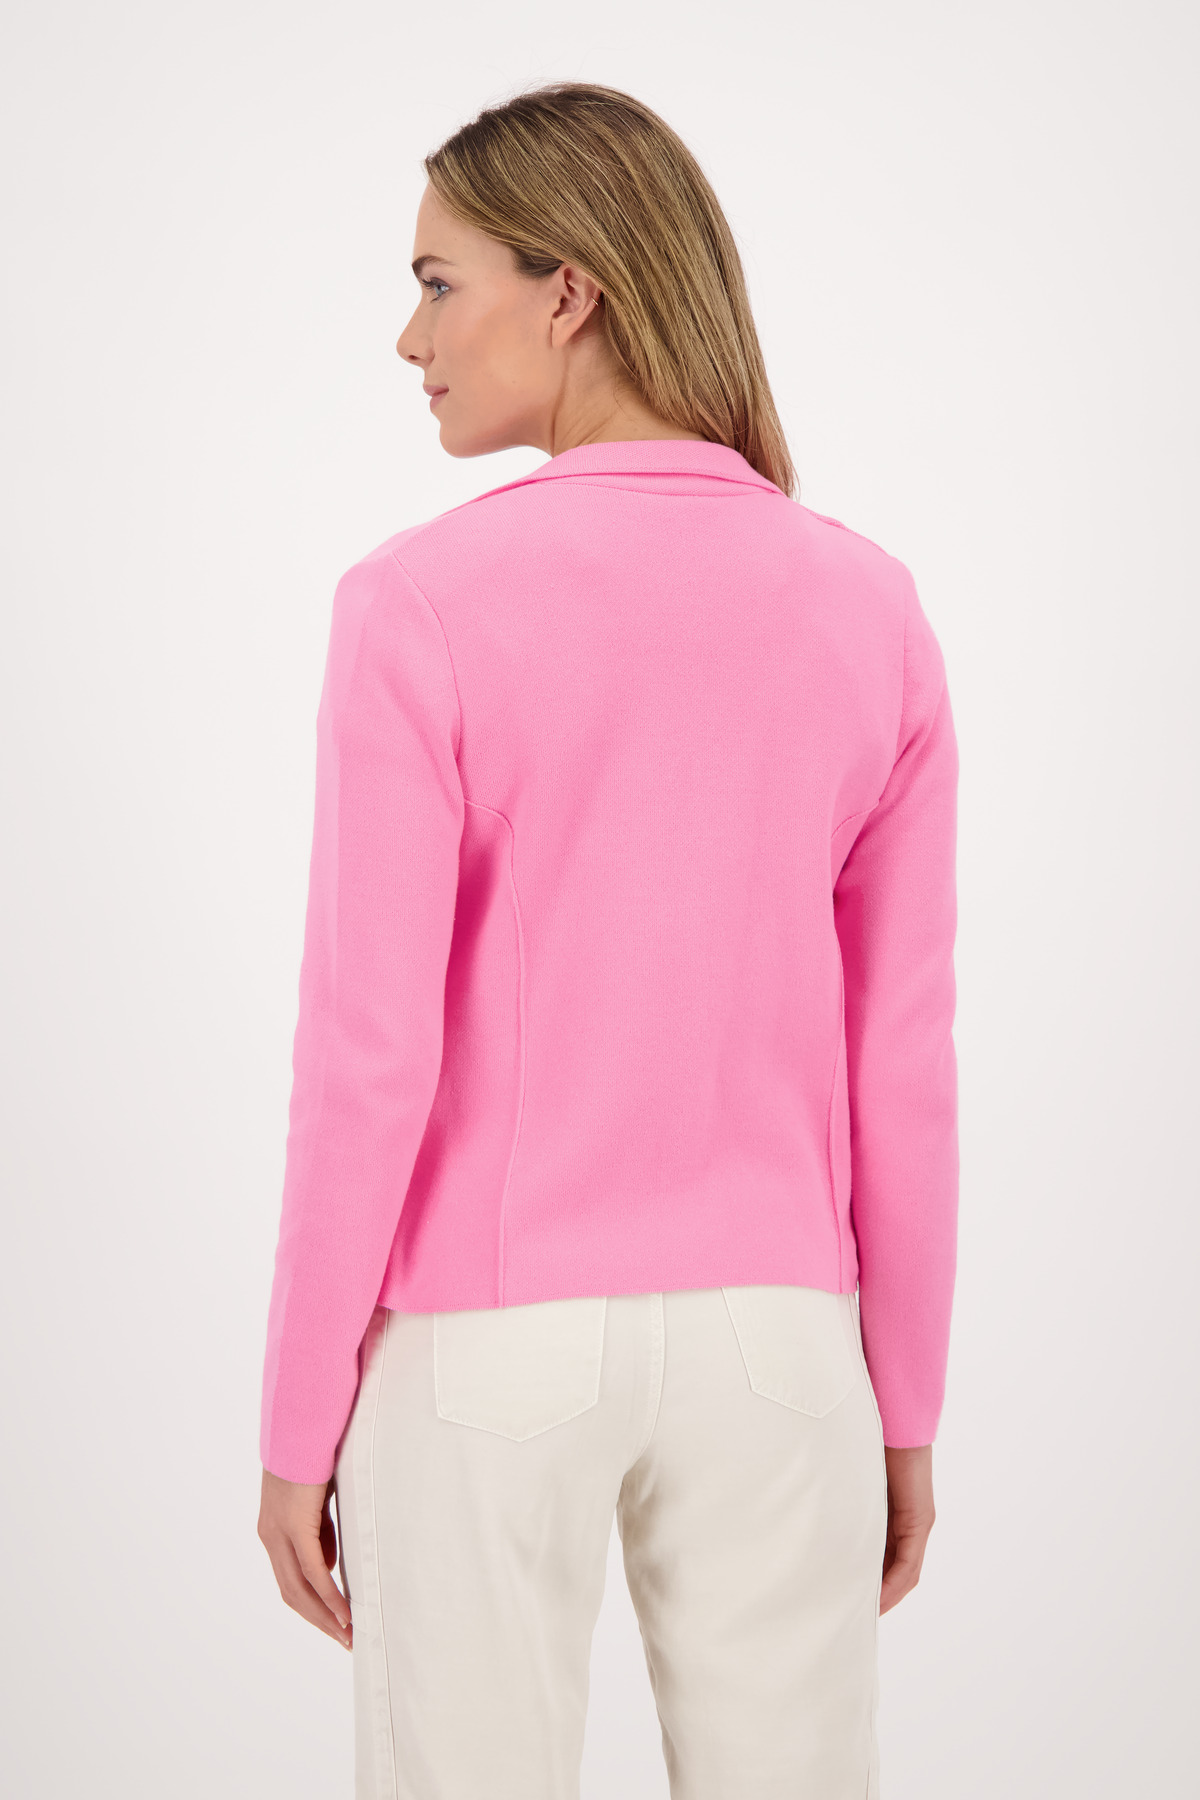 Monari Feinstrick-Blazer Spring Air pink